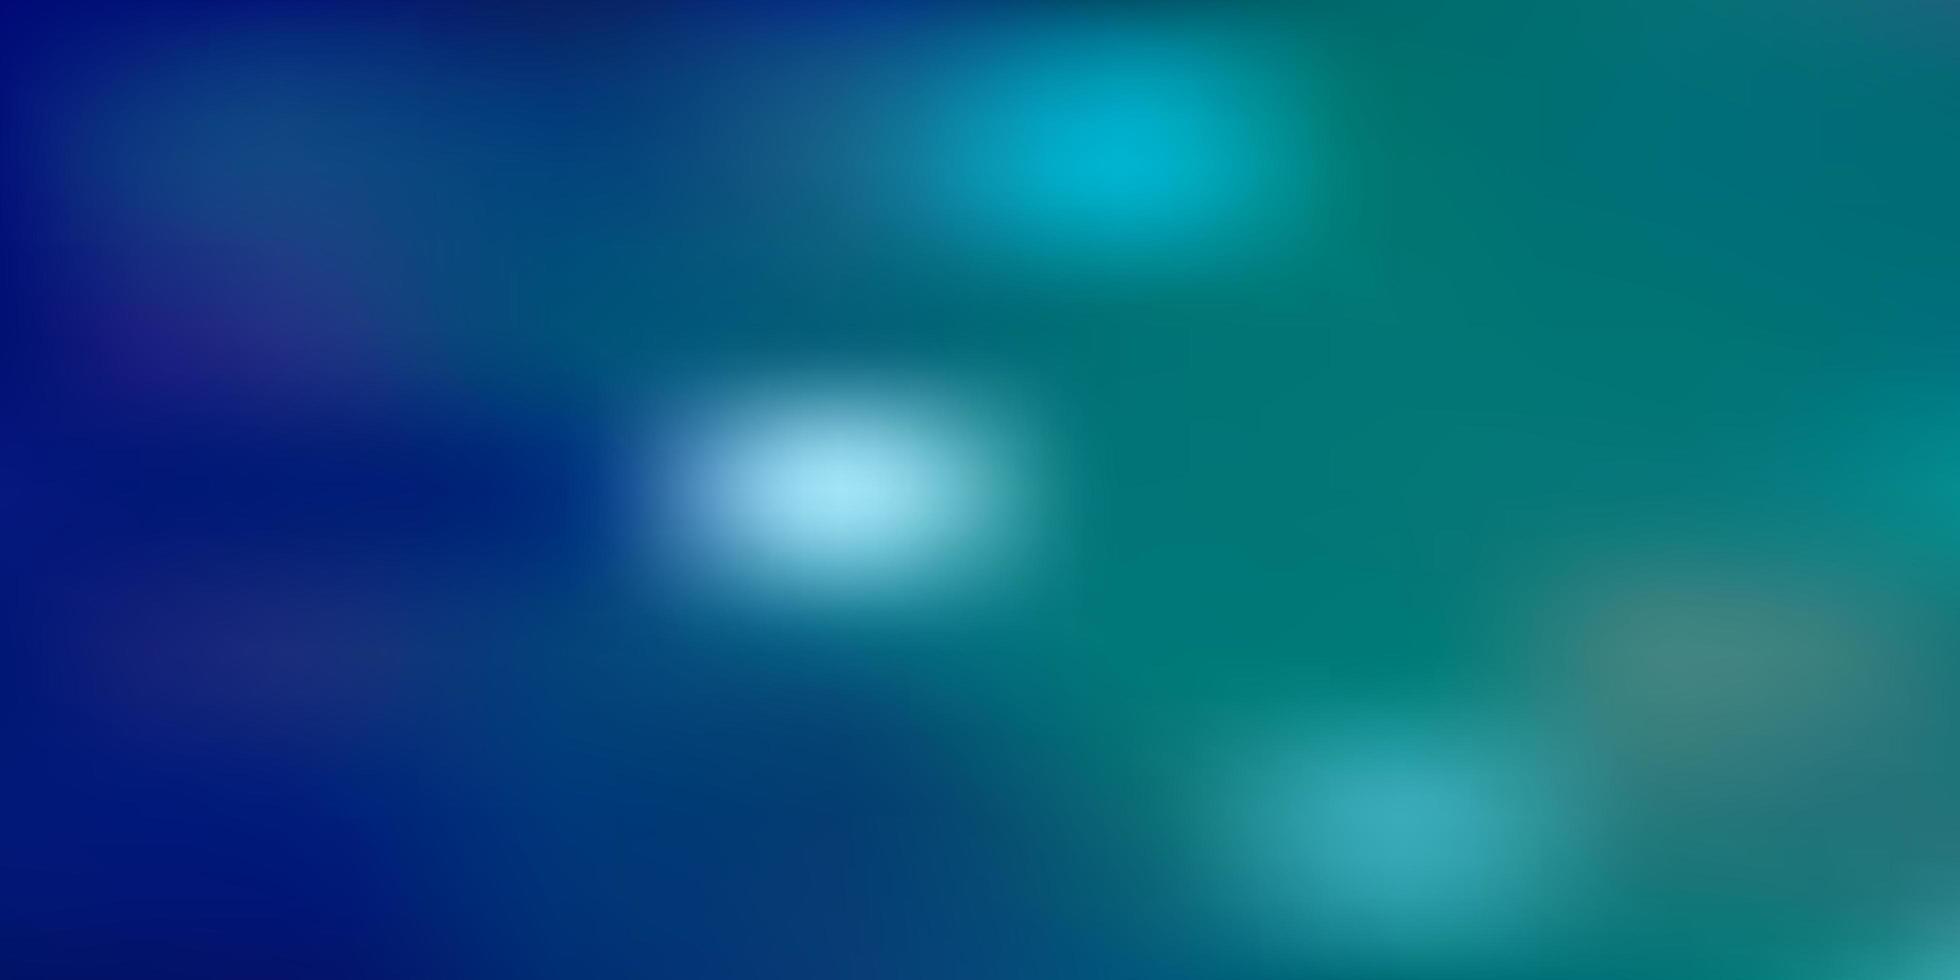 layout de desfoque de vetor azul claro